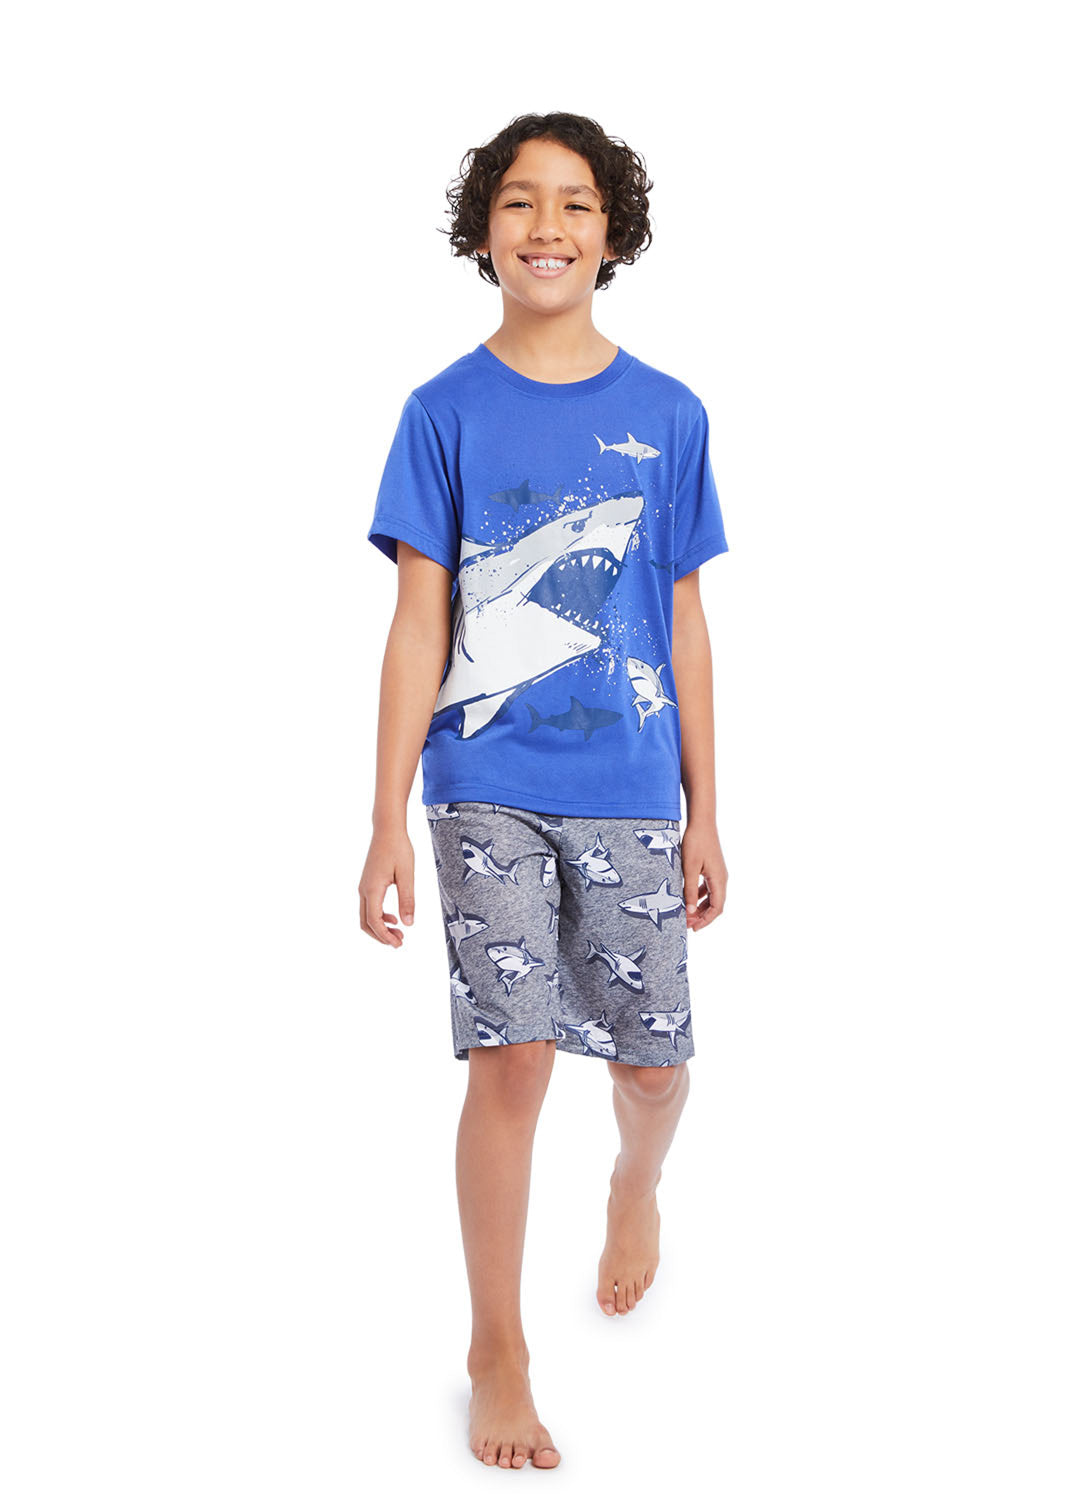 Boy wearing Shark t-shirt print and shorts with sharks print